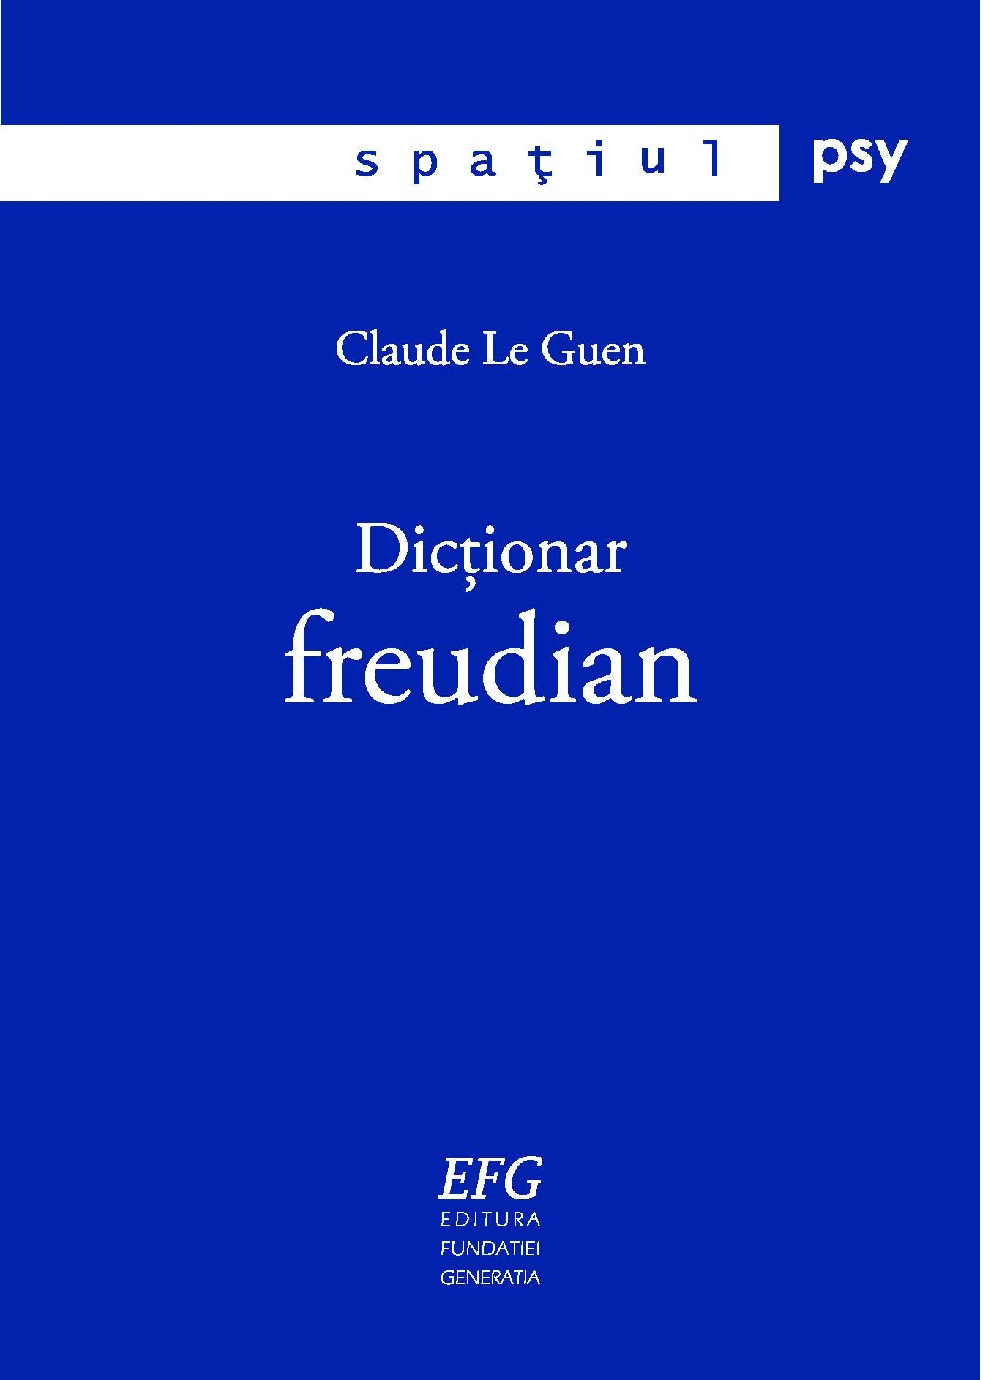 Dictionar freudian | Claude Le Guen carturesti.ro poza bestsellers.ro